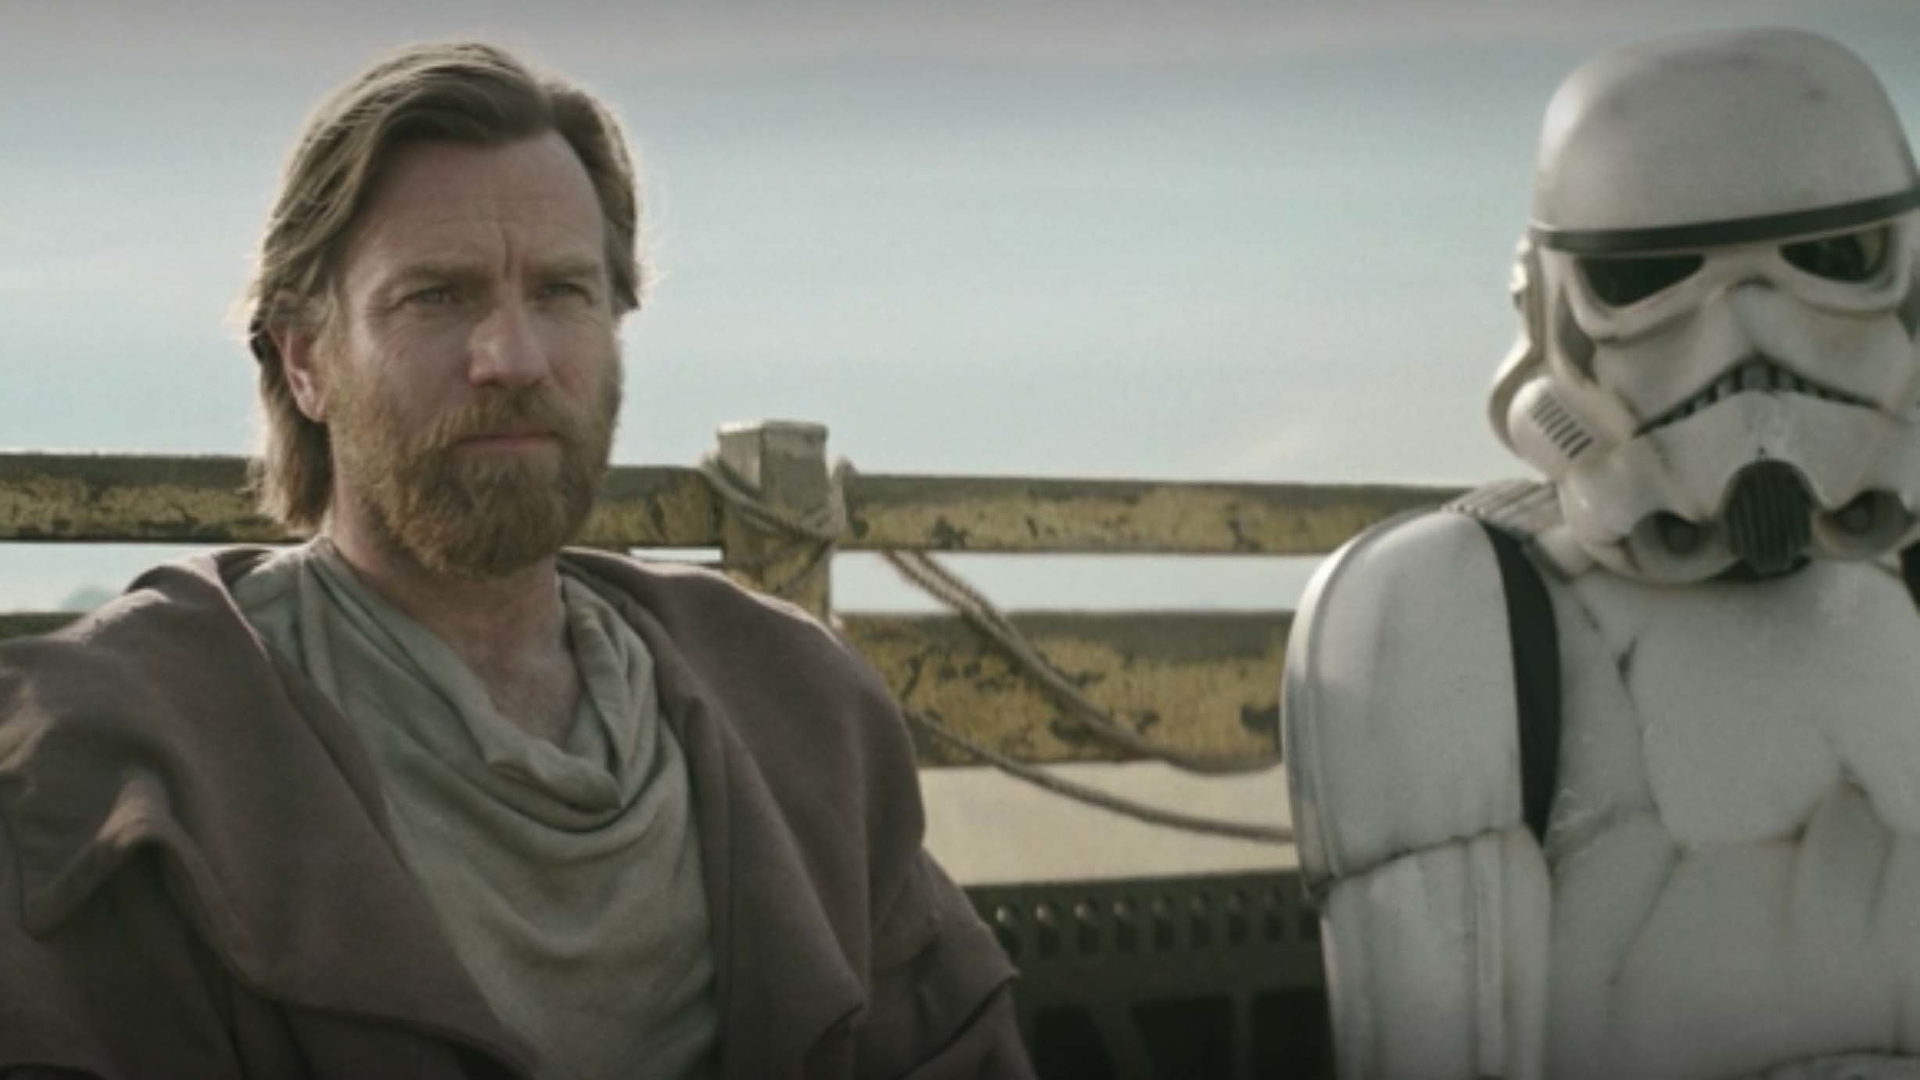 Obi-Wan Kenobi': A guide to the new 'Star Wars' series - Trail Times